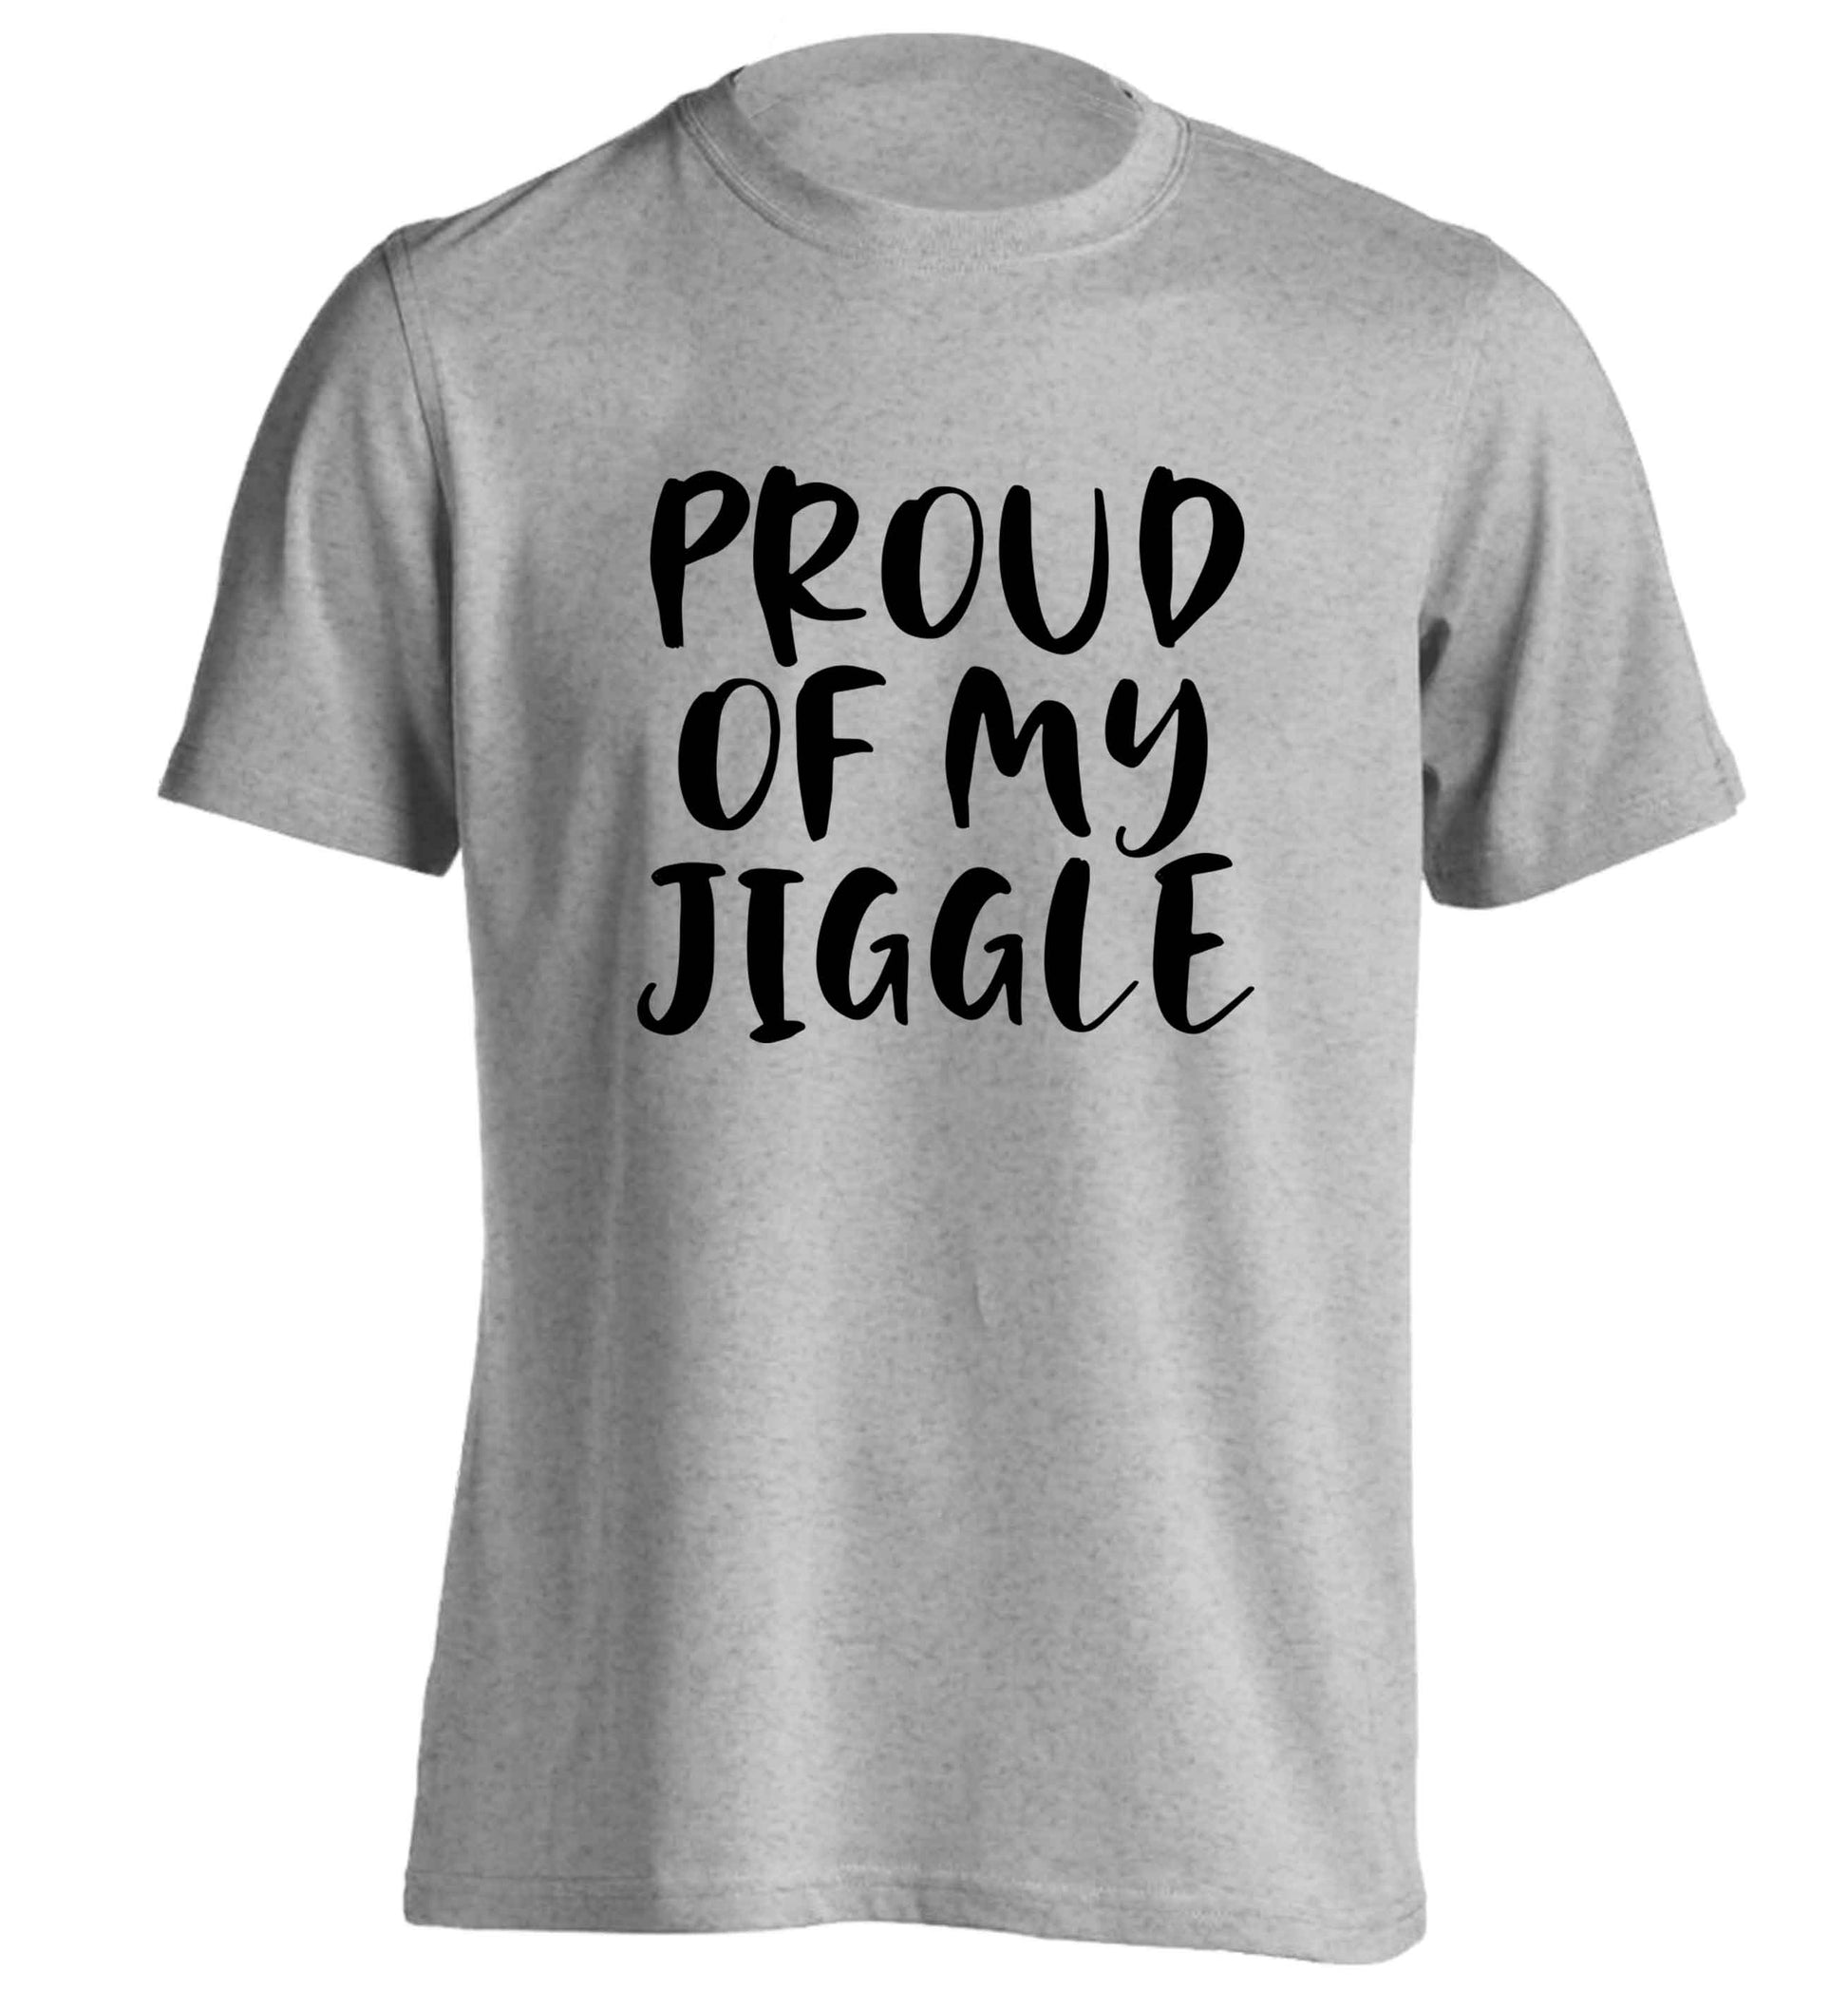 Proud of my jiggle adults unisex grey Tshirt 2XL